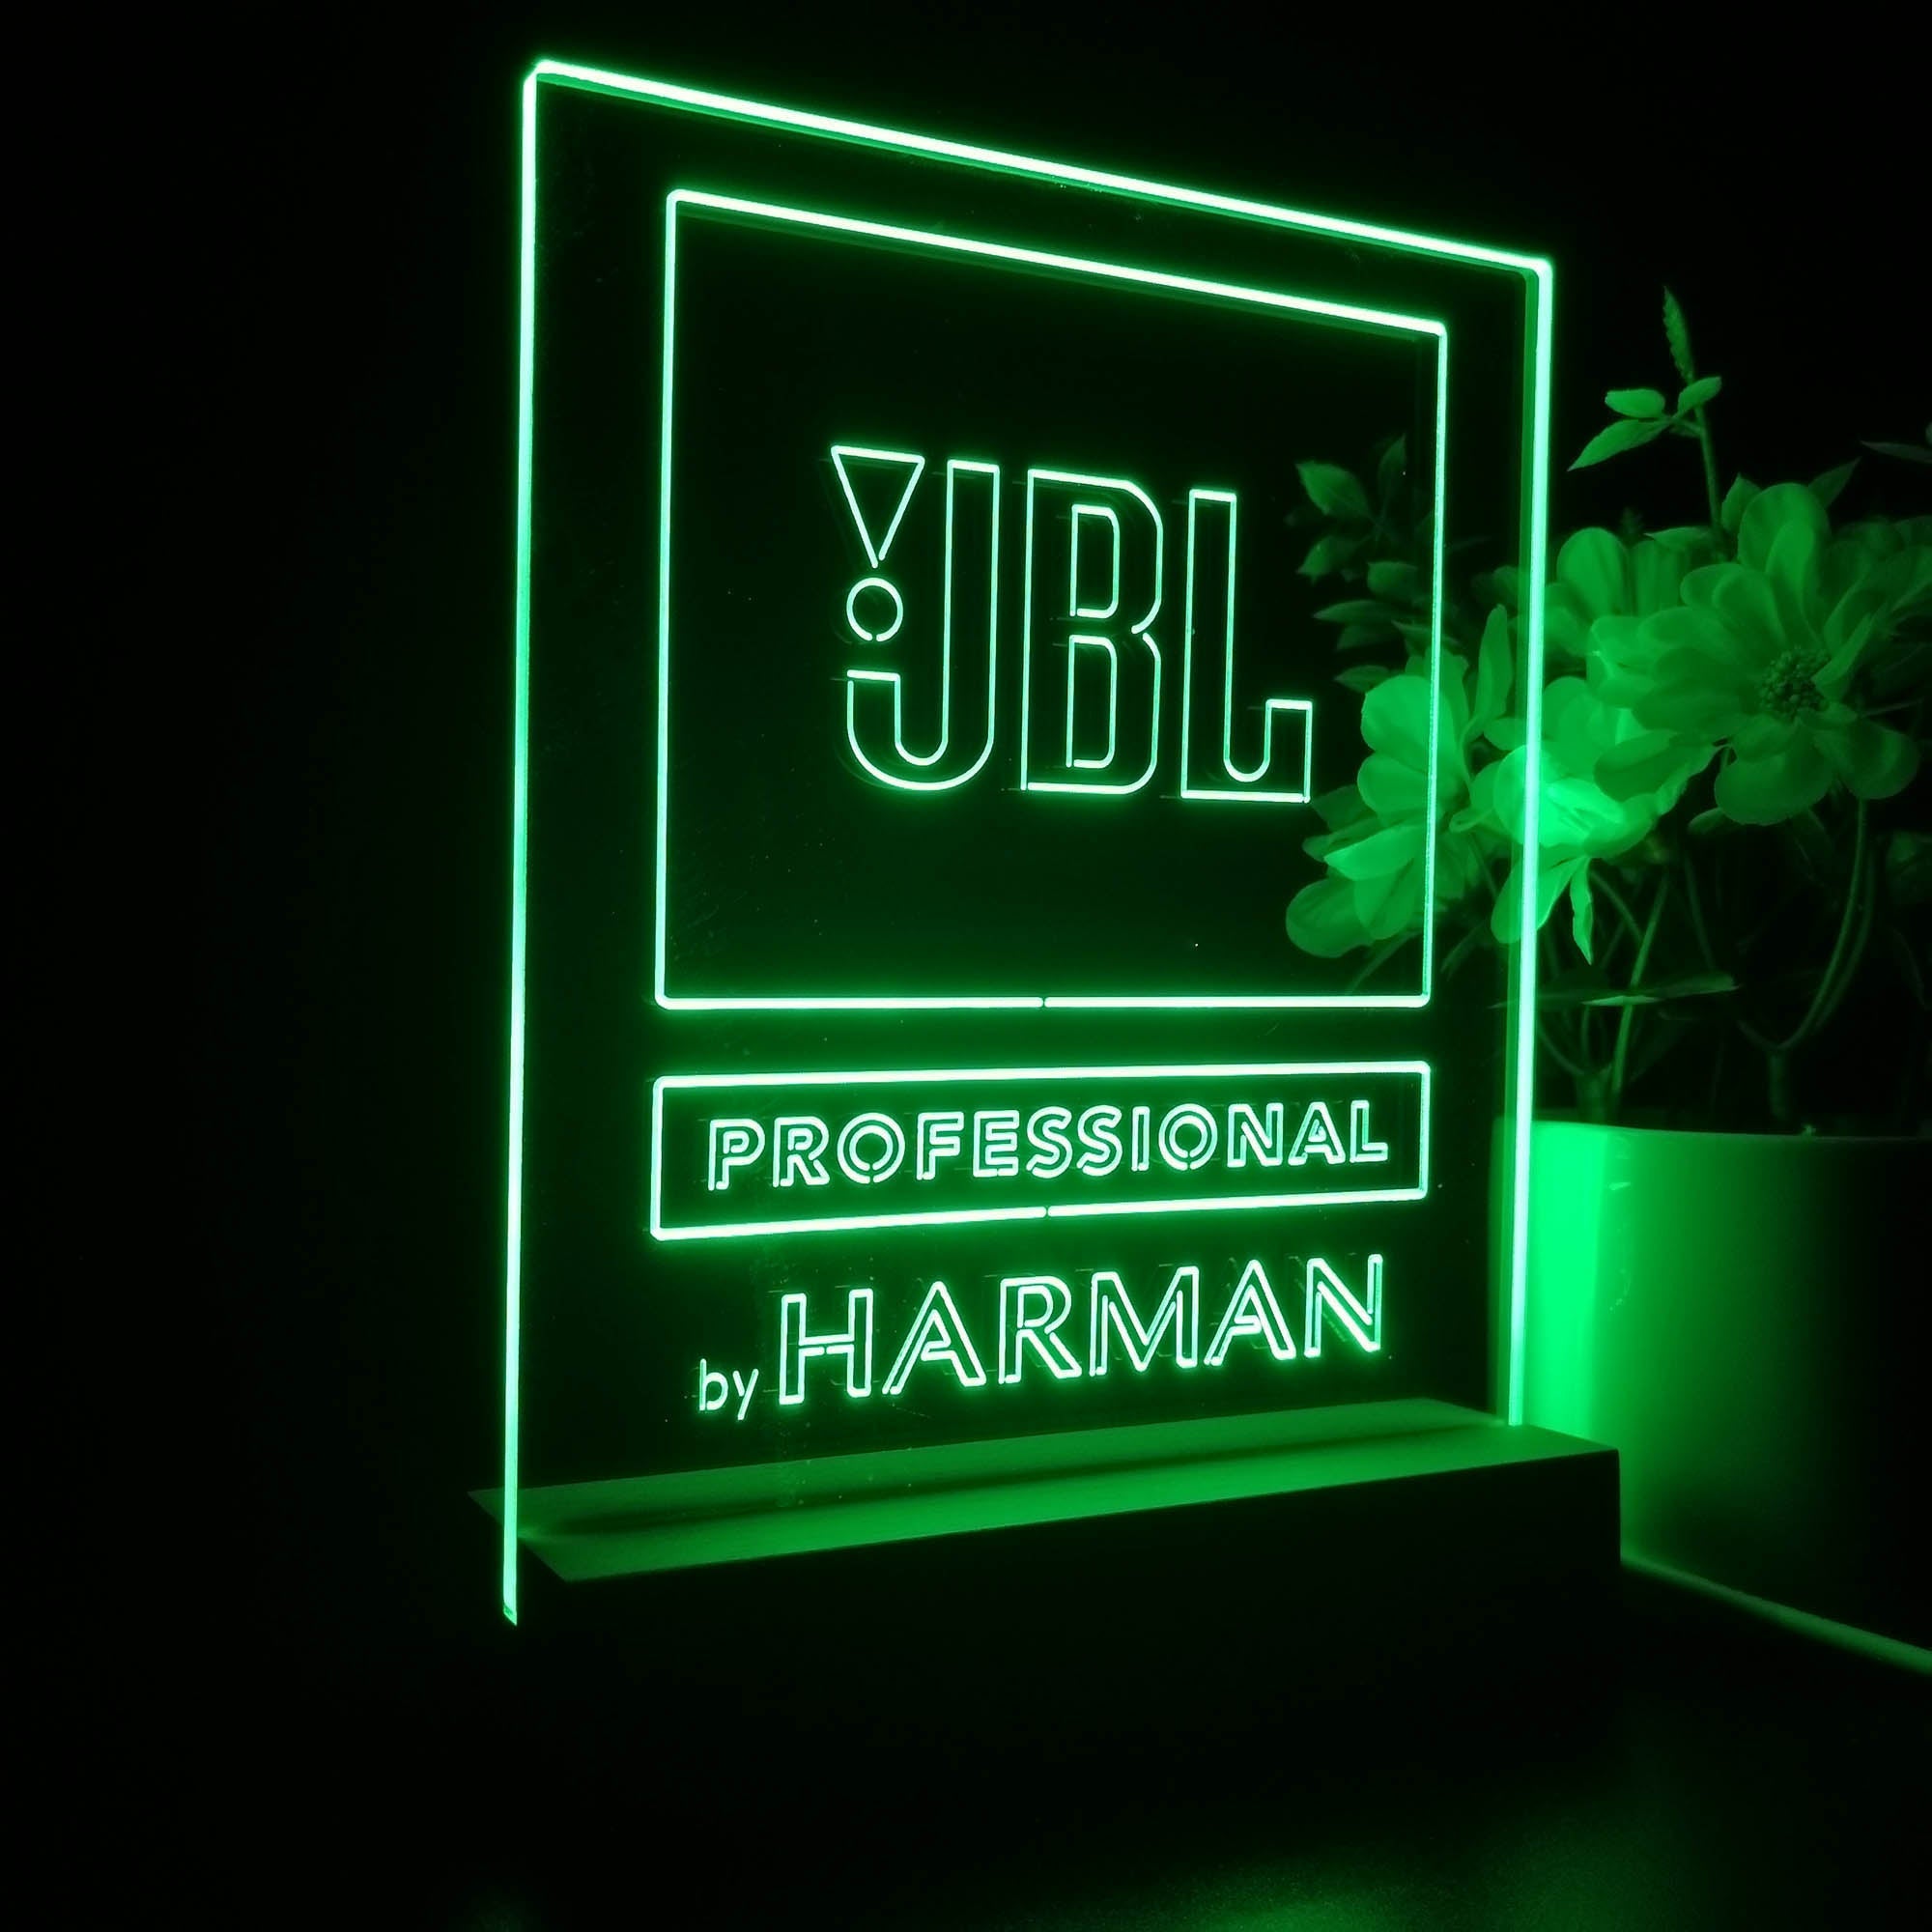 JBL Professional Harman Audio Home Theater Cinema 3D Illusion Night Light Desk Lamp